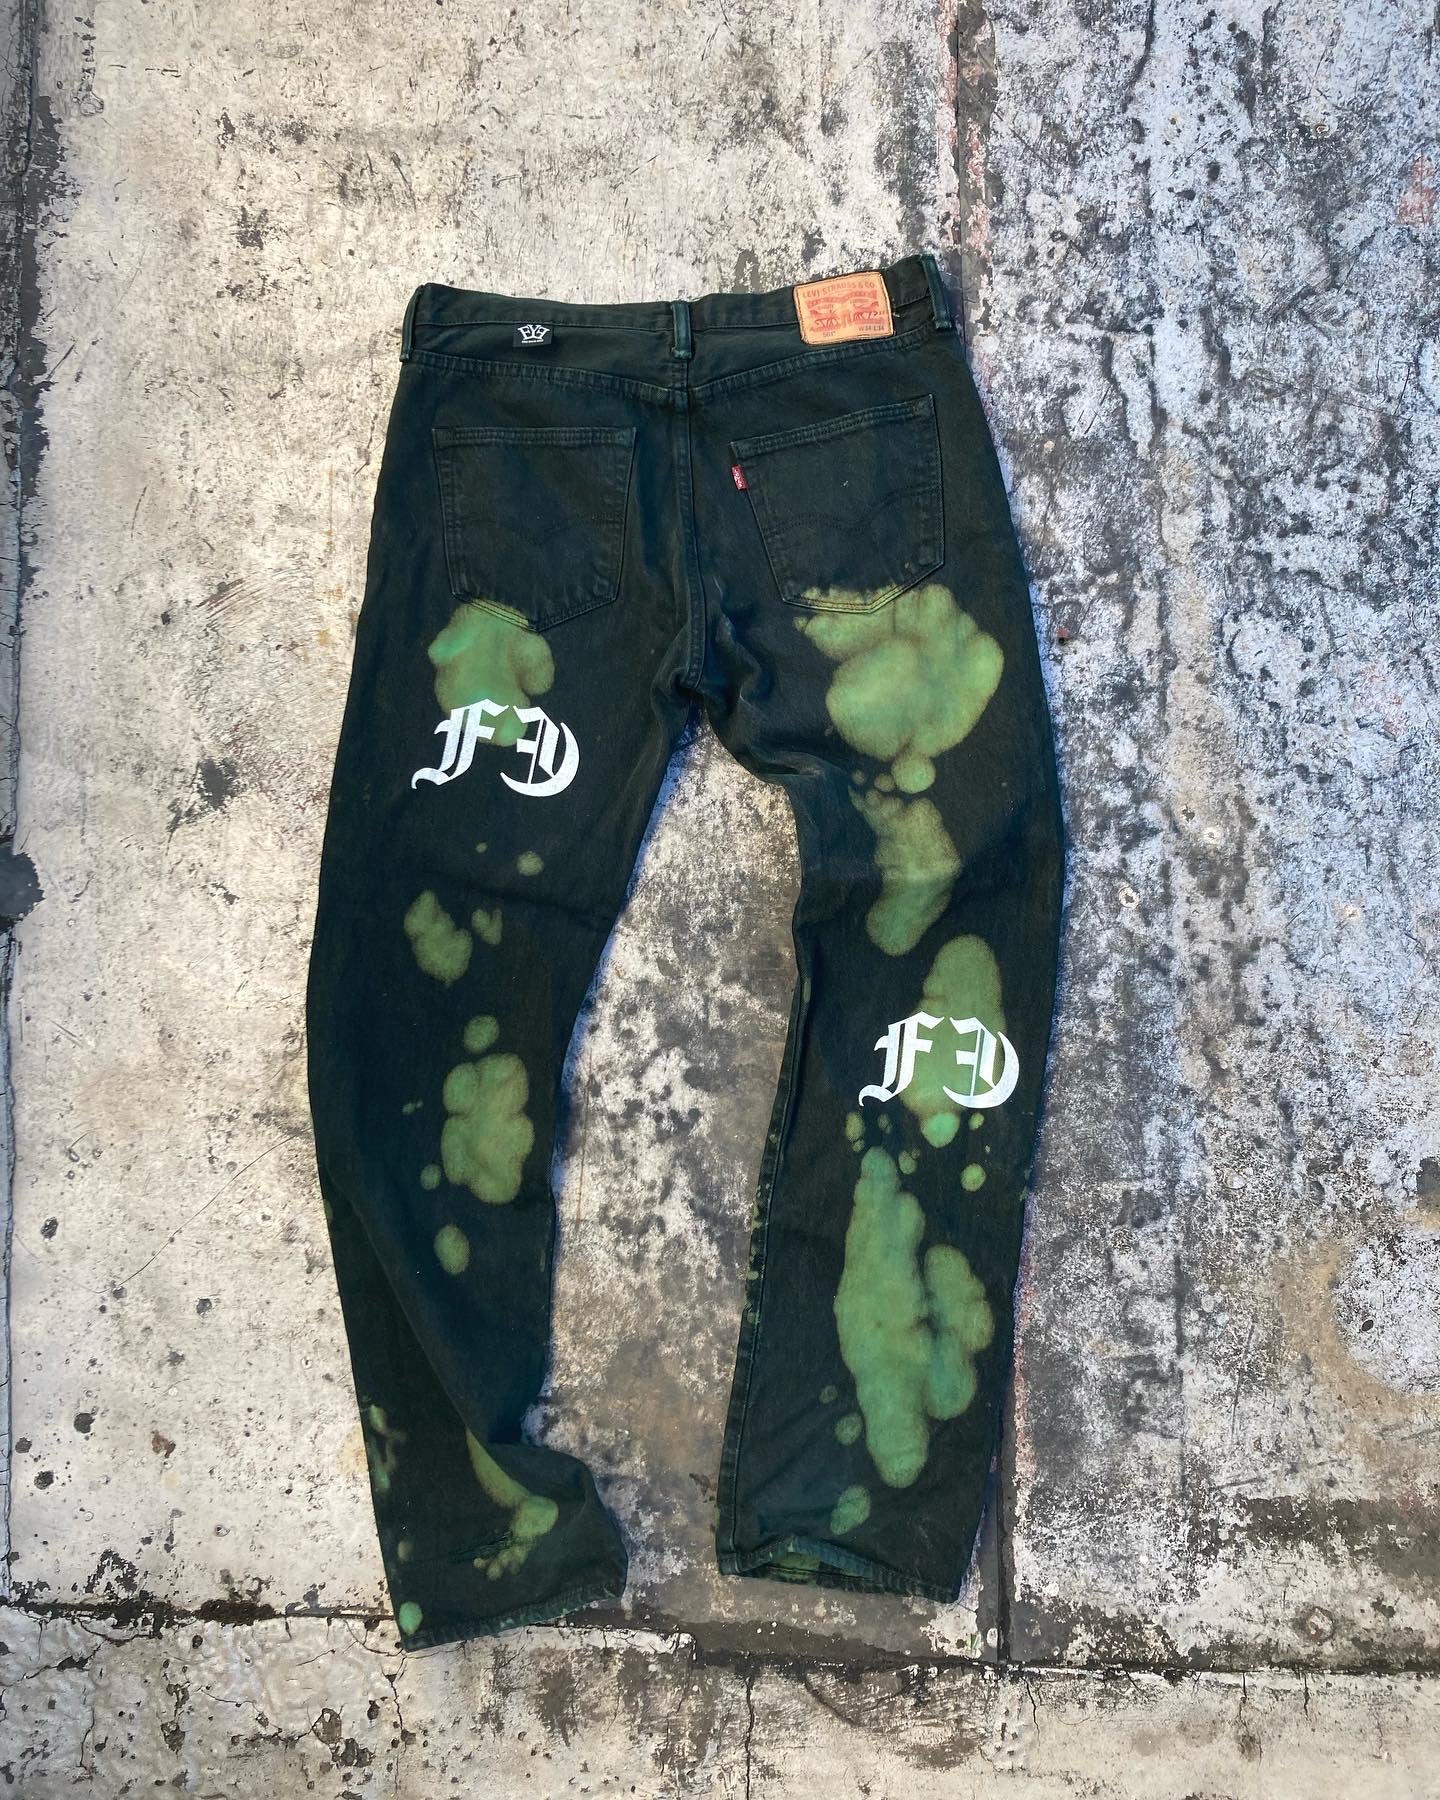 Black/green jeans